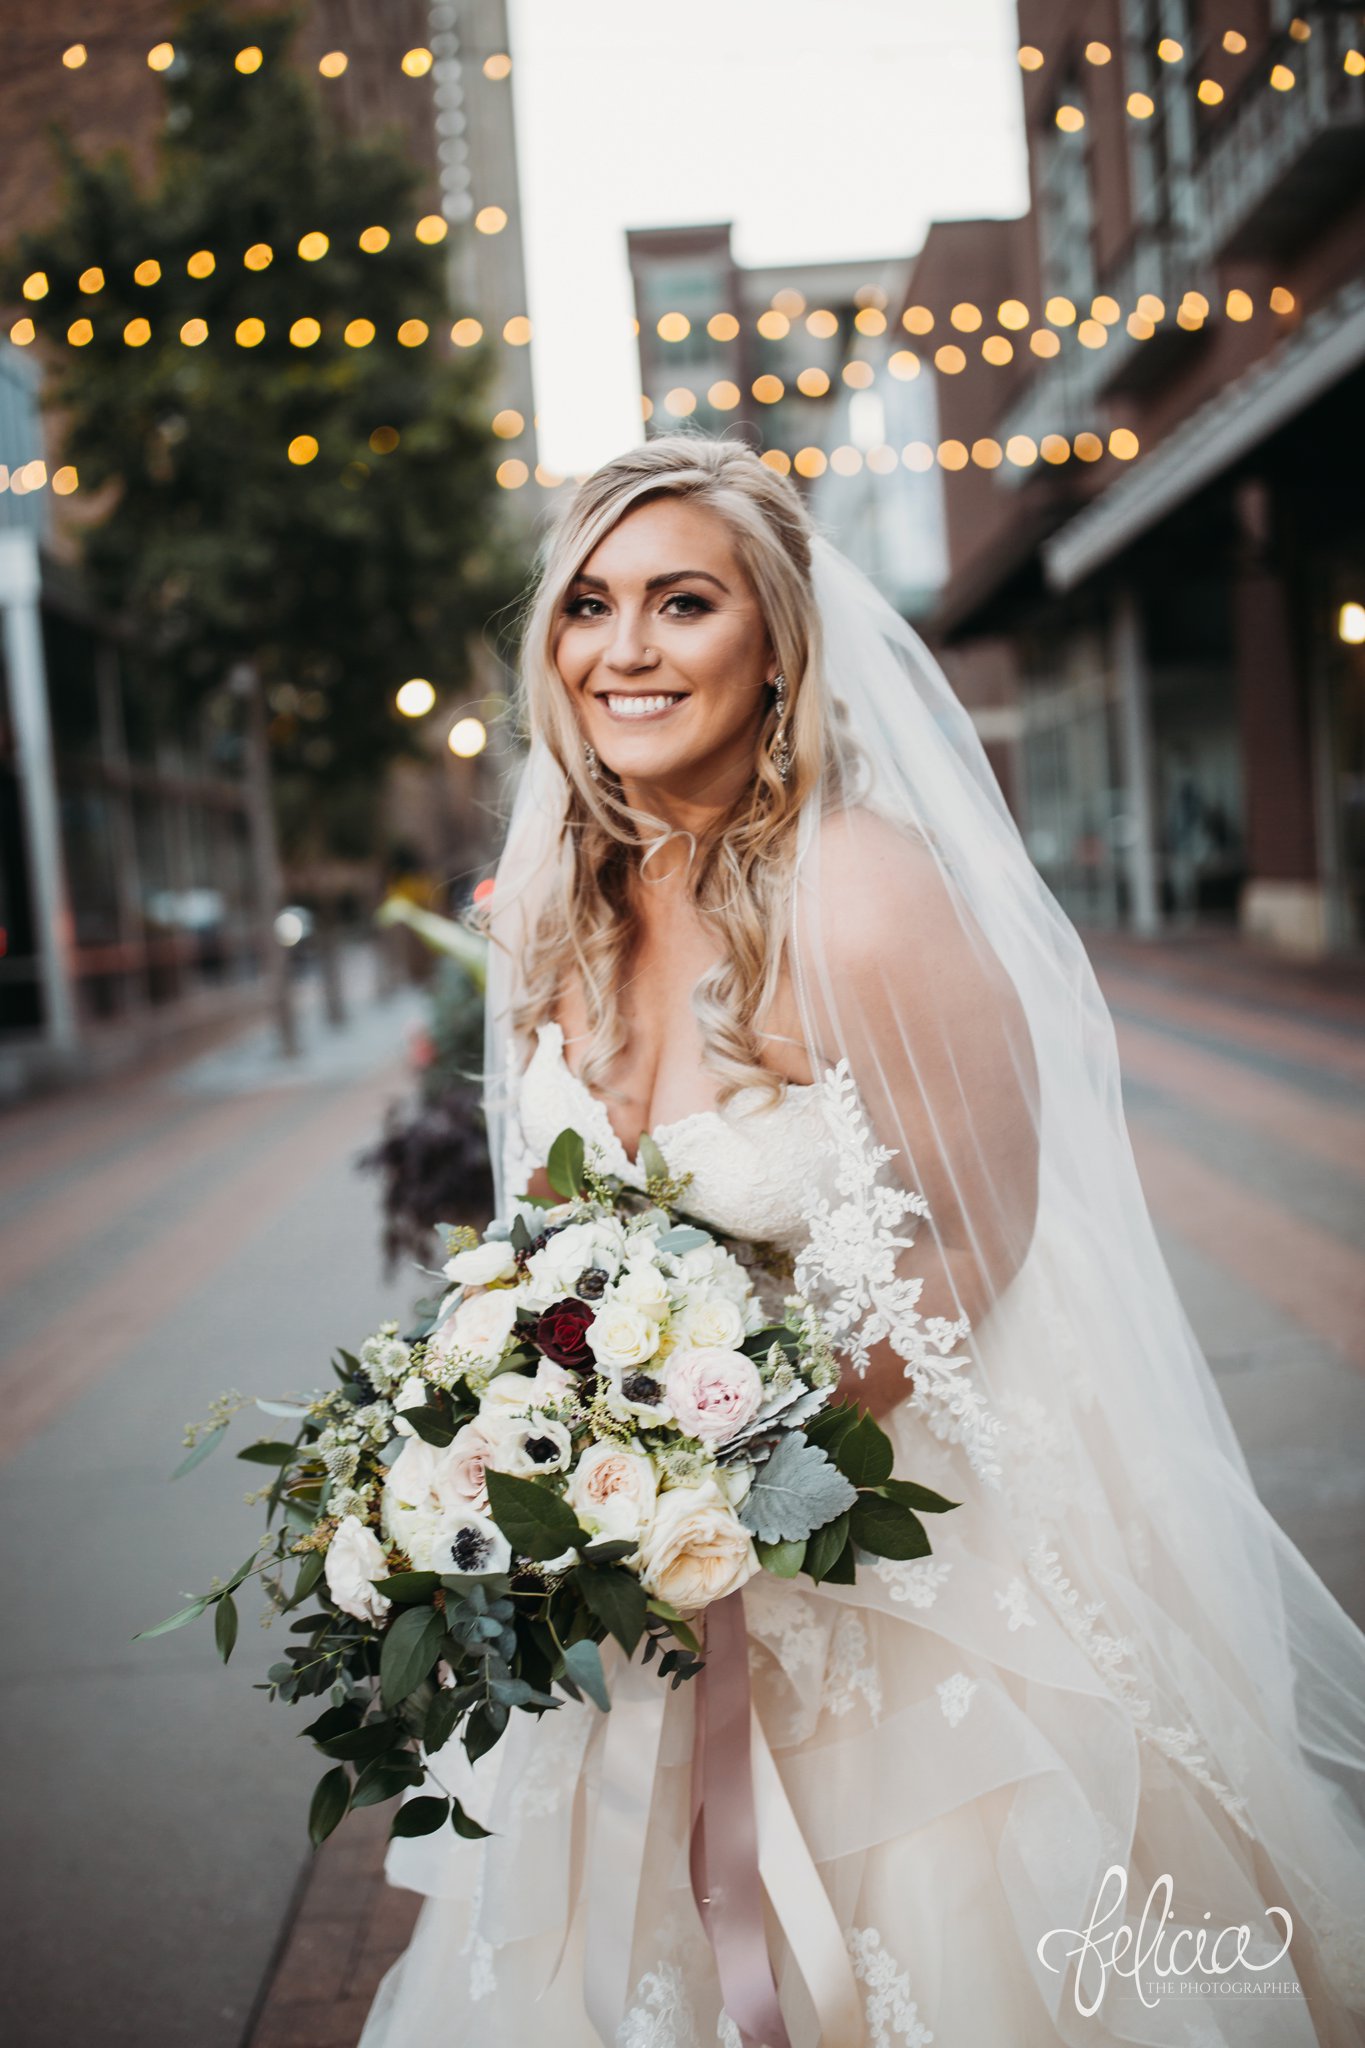 images by feliciathephotographer.com | wedding photographer | downtown kansas city | bridal portrait | sting lights | power and light | glamorous | lace dress | belle vogue | wild hill flowers | 